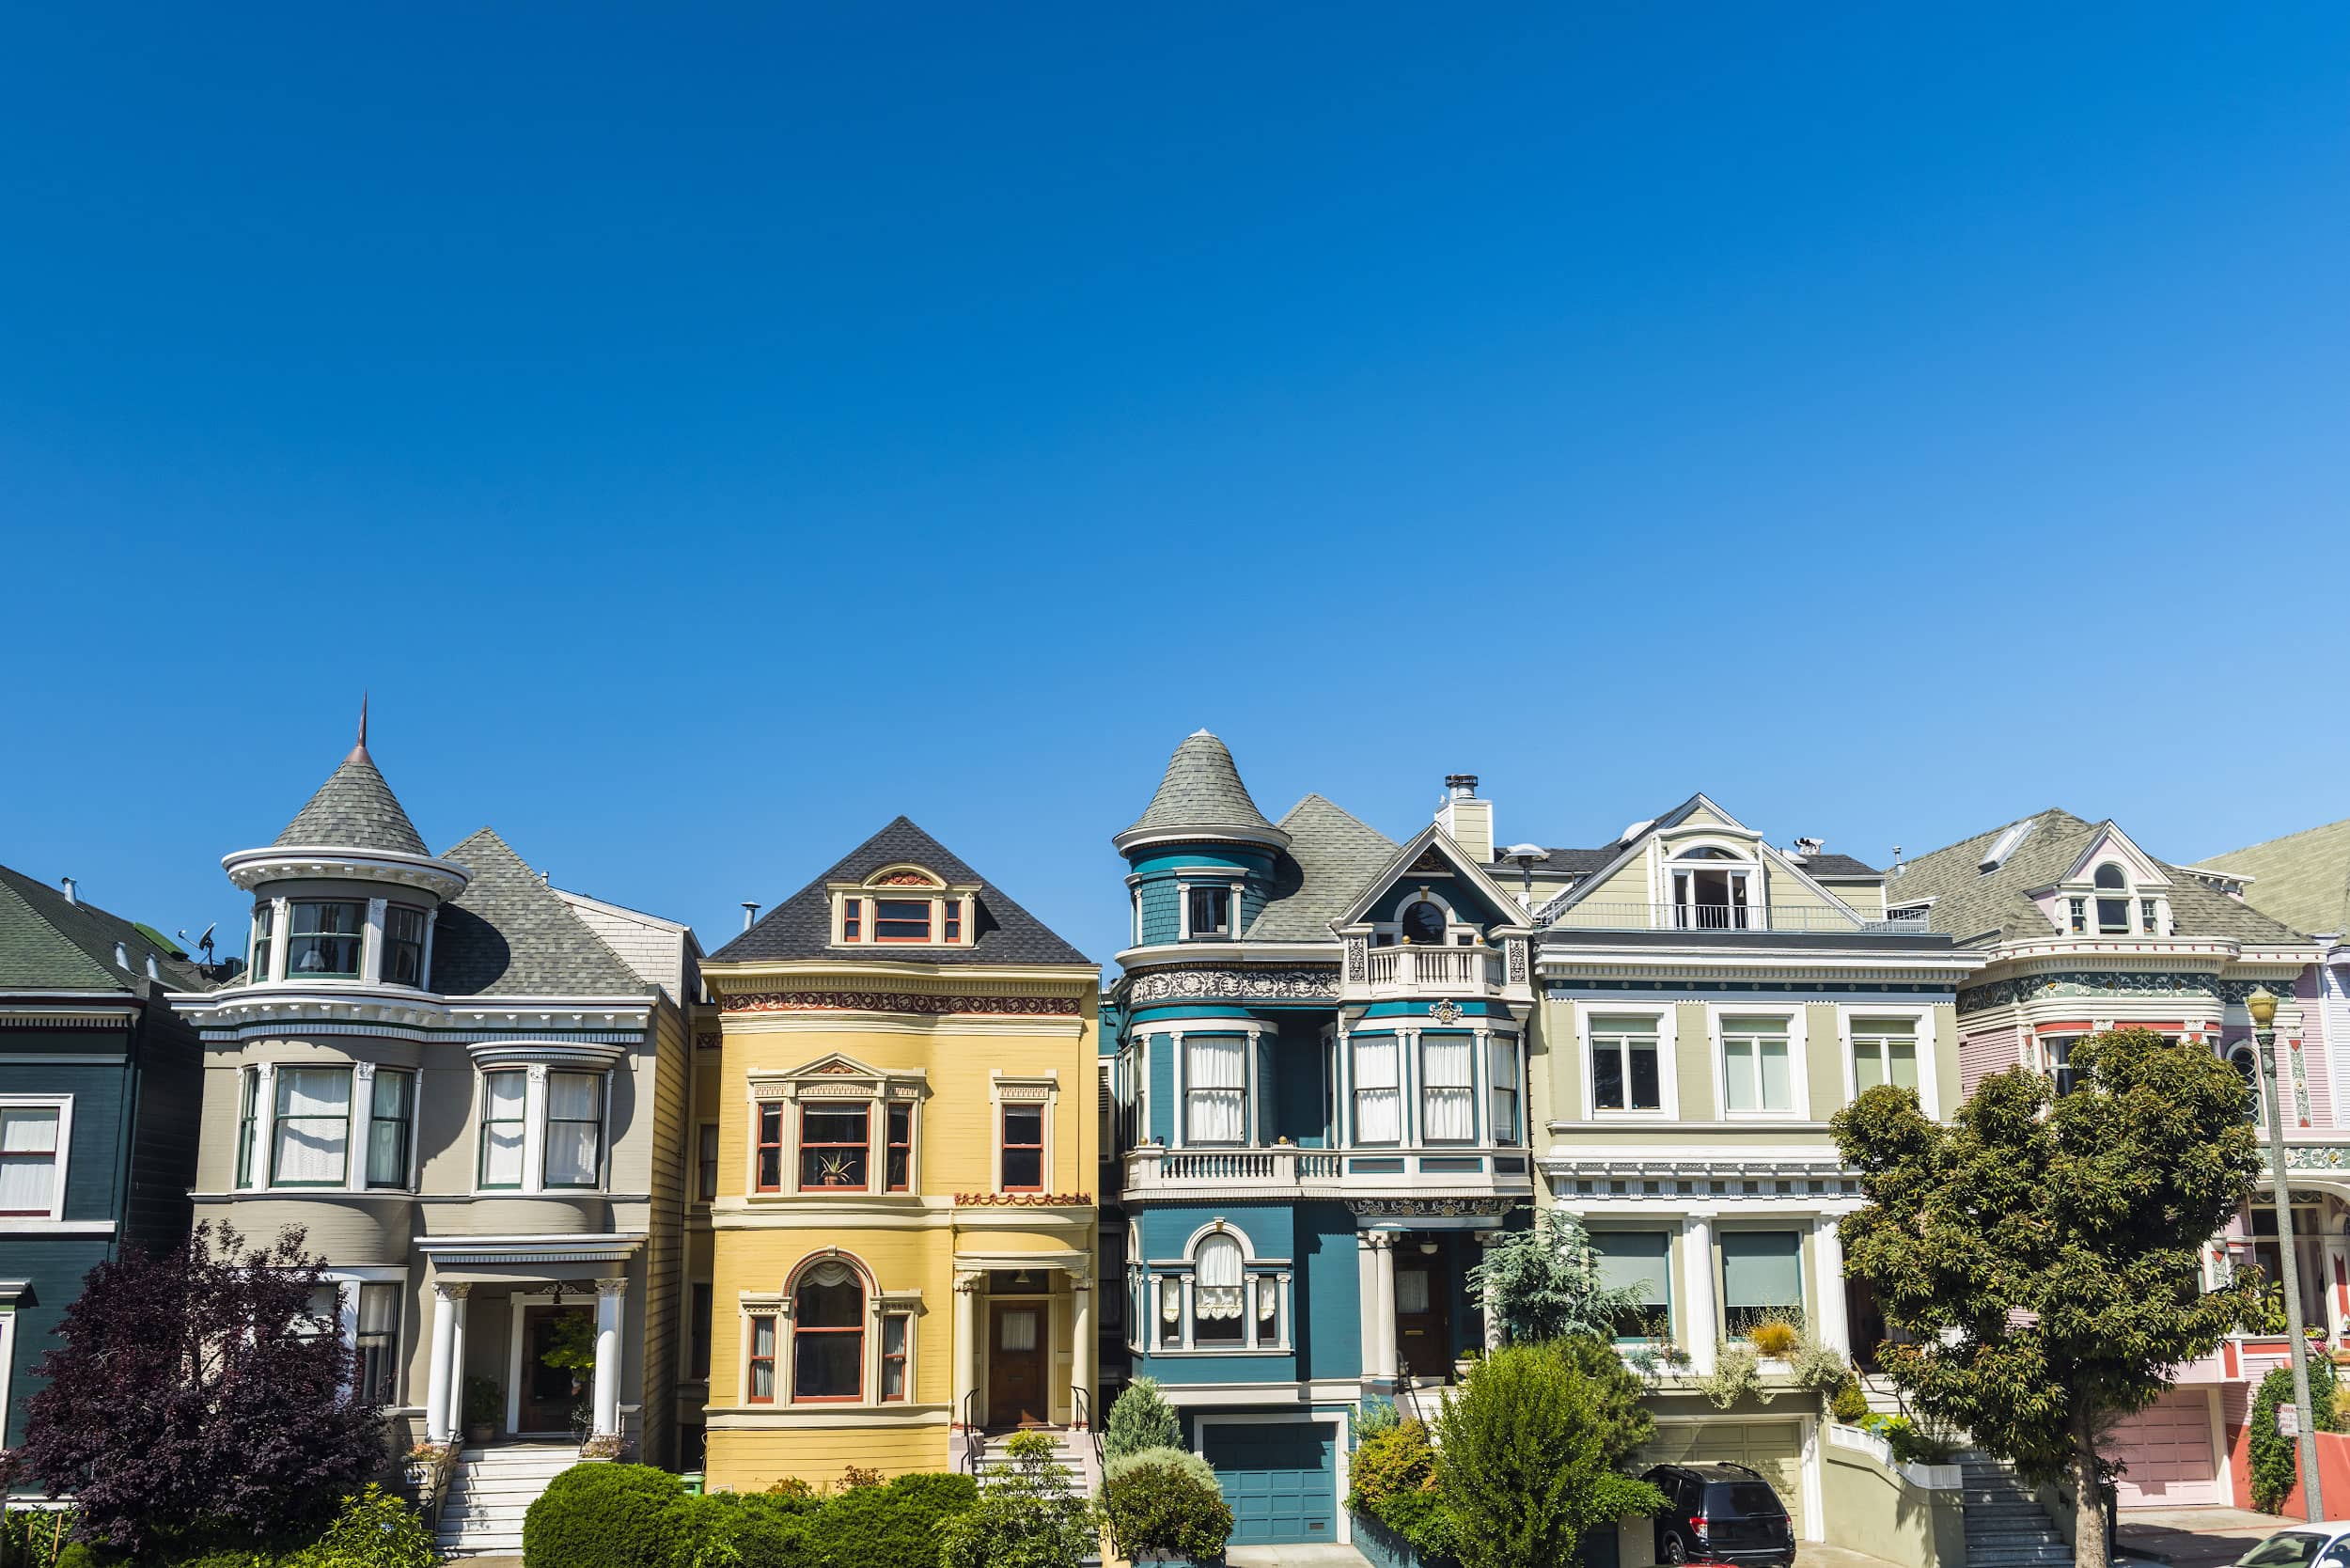 Historical neighborhoods of San Francisco